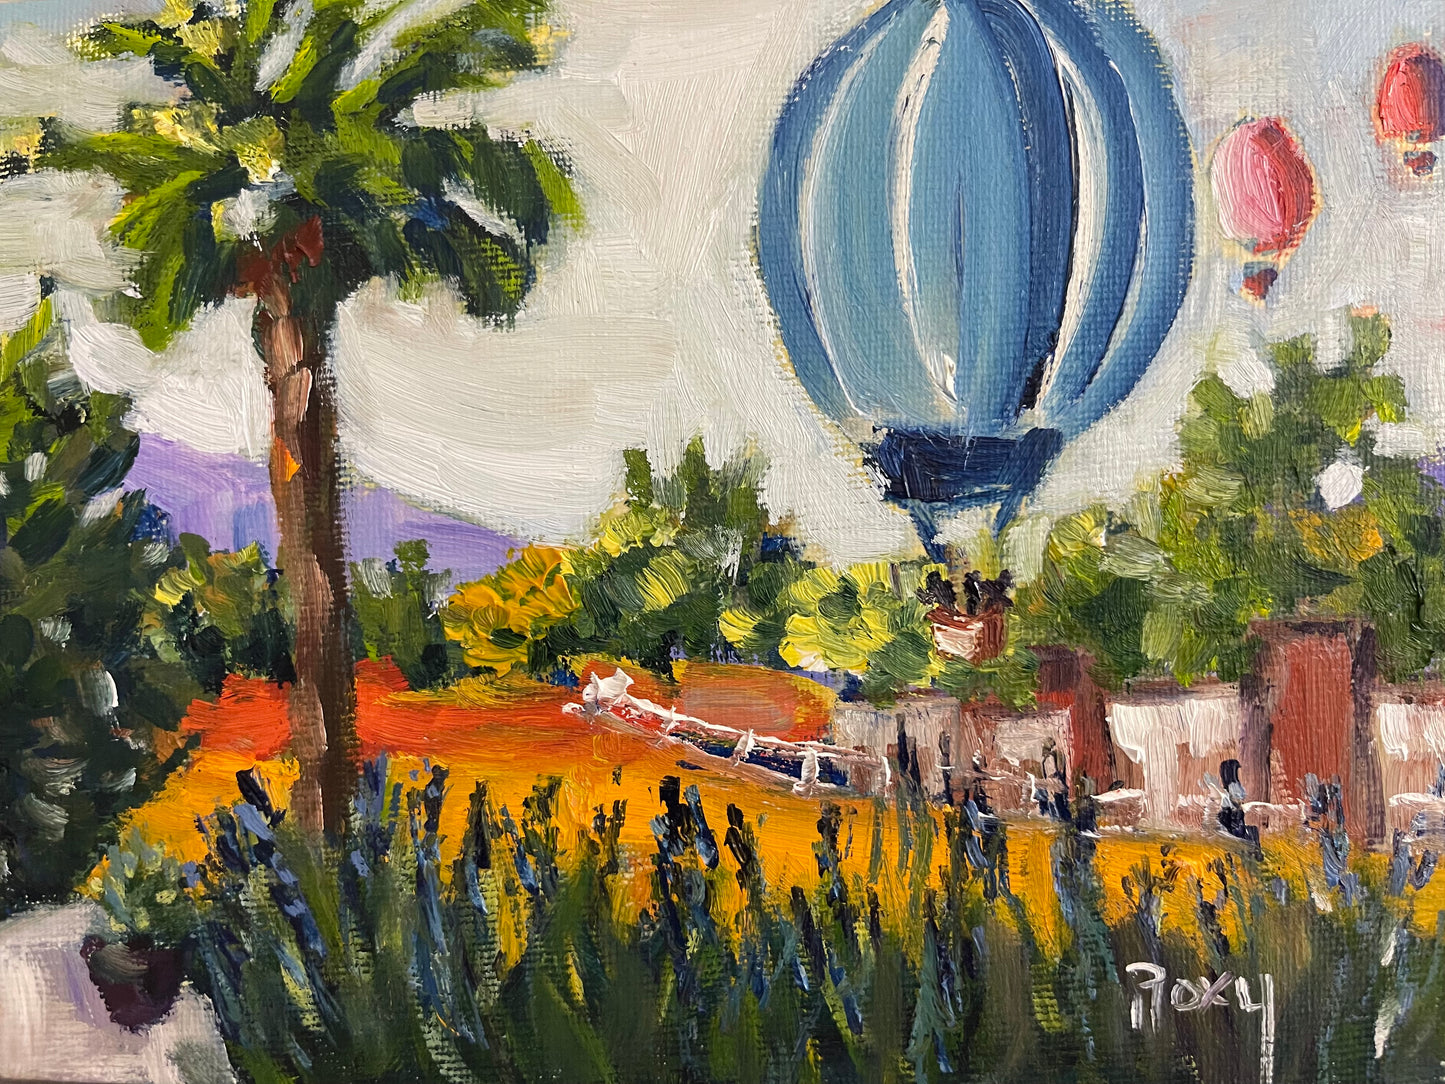 Balloons by Lorenzi Original Oil Painting 6x8 Unframed